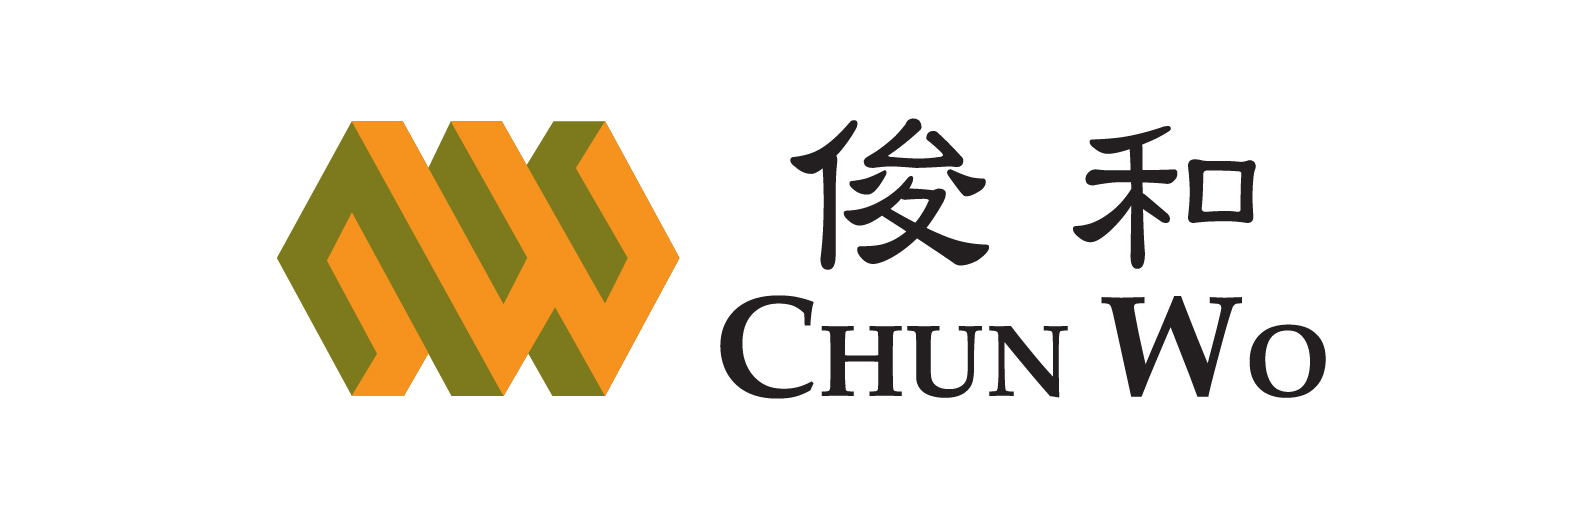 Chun Wo Construction Holdings Company Limited